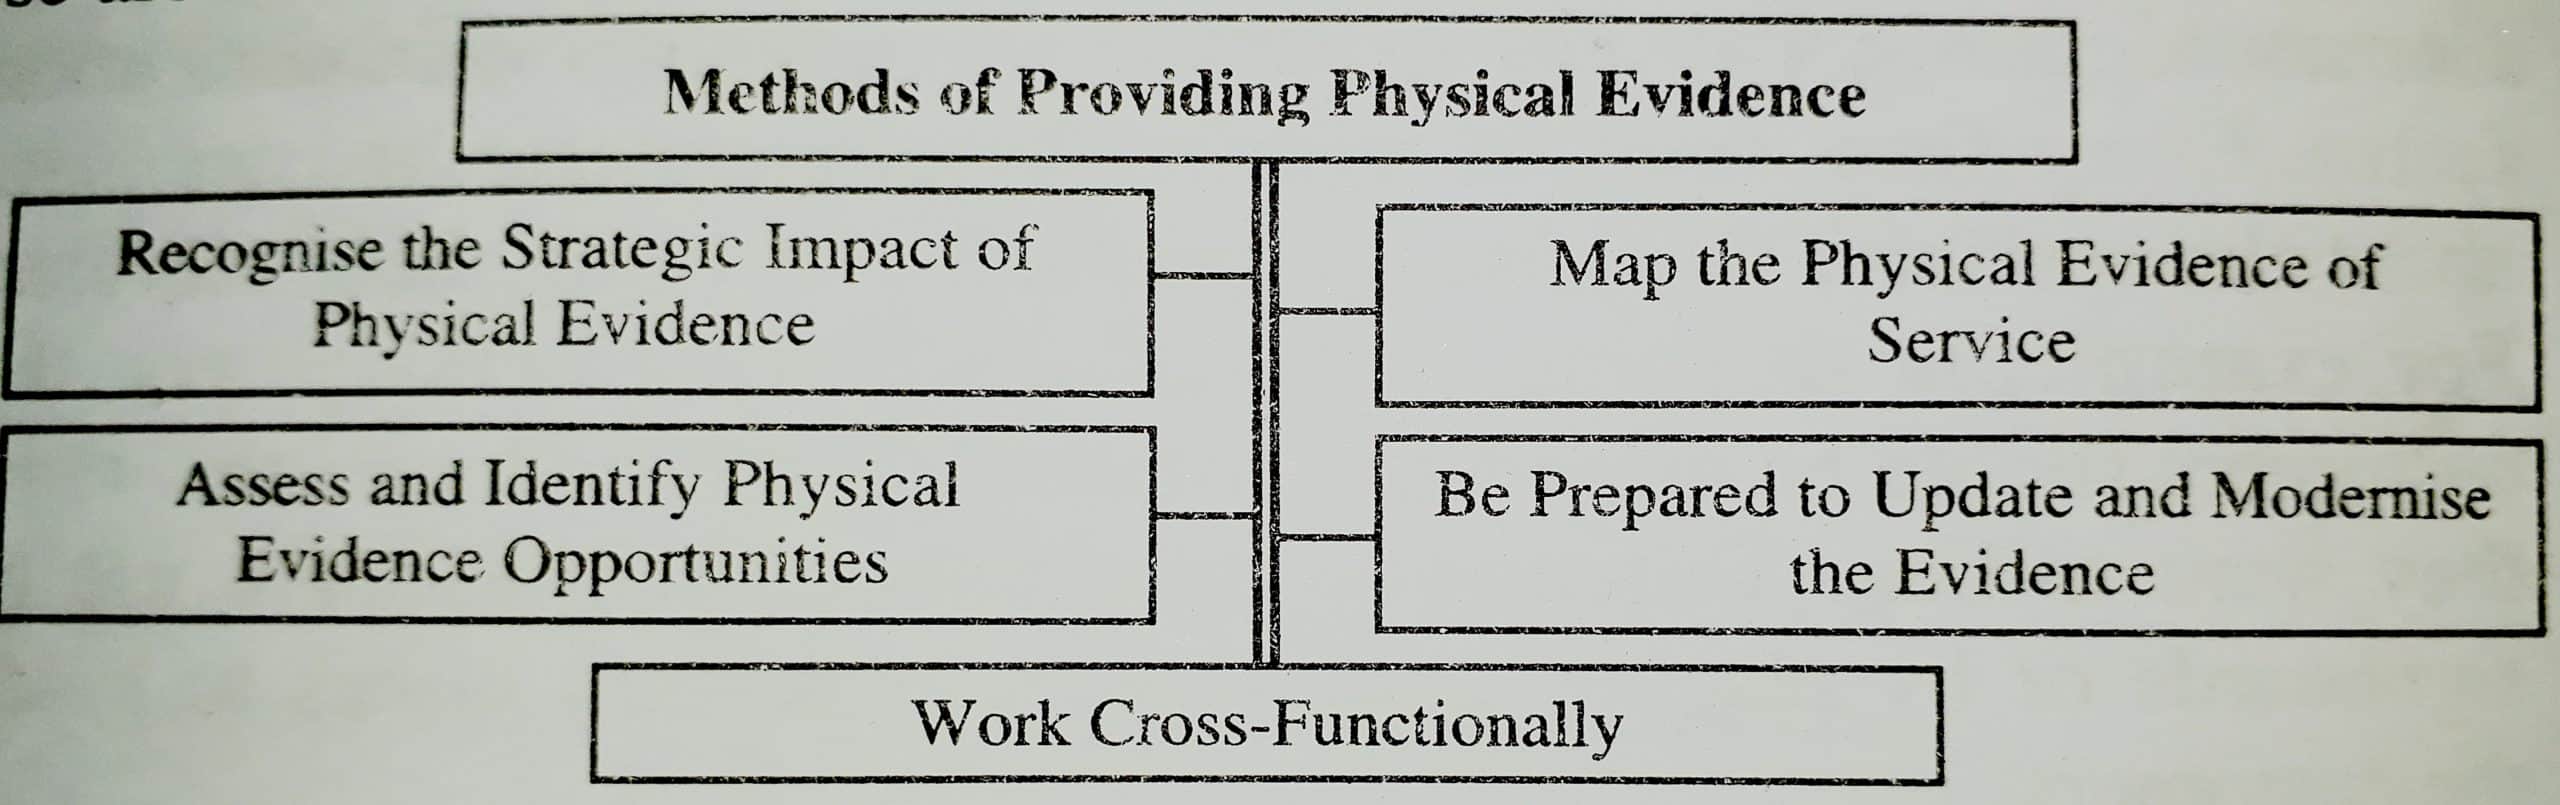 Methods of Providing Physical Evidence